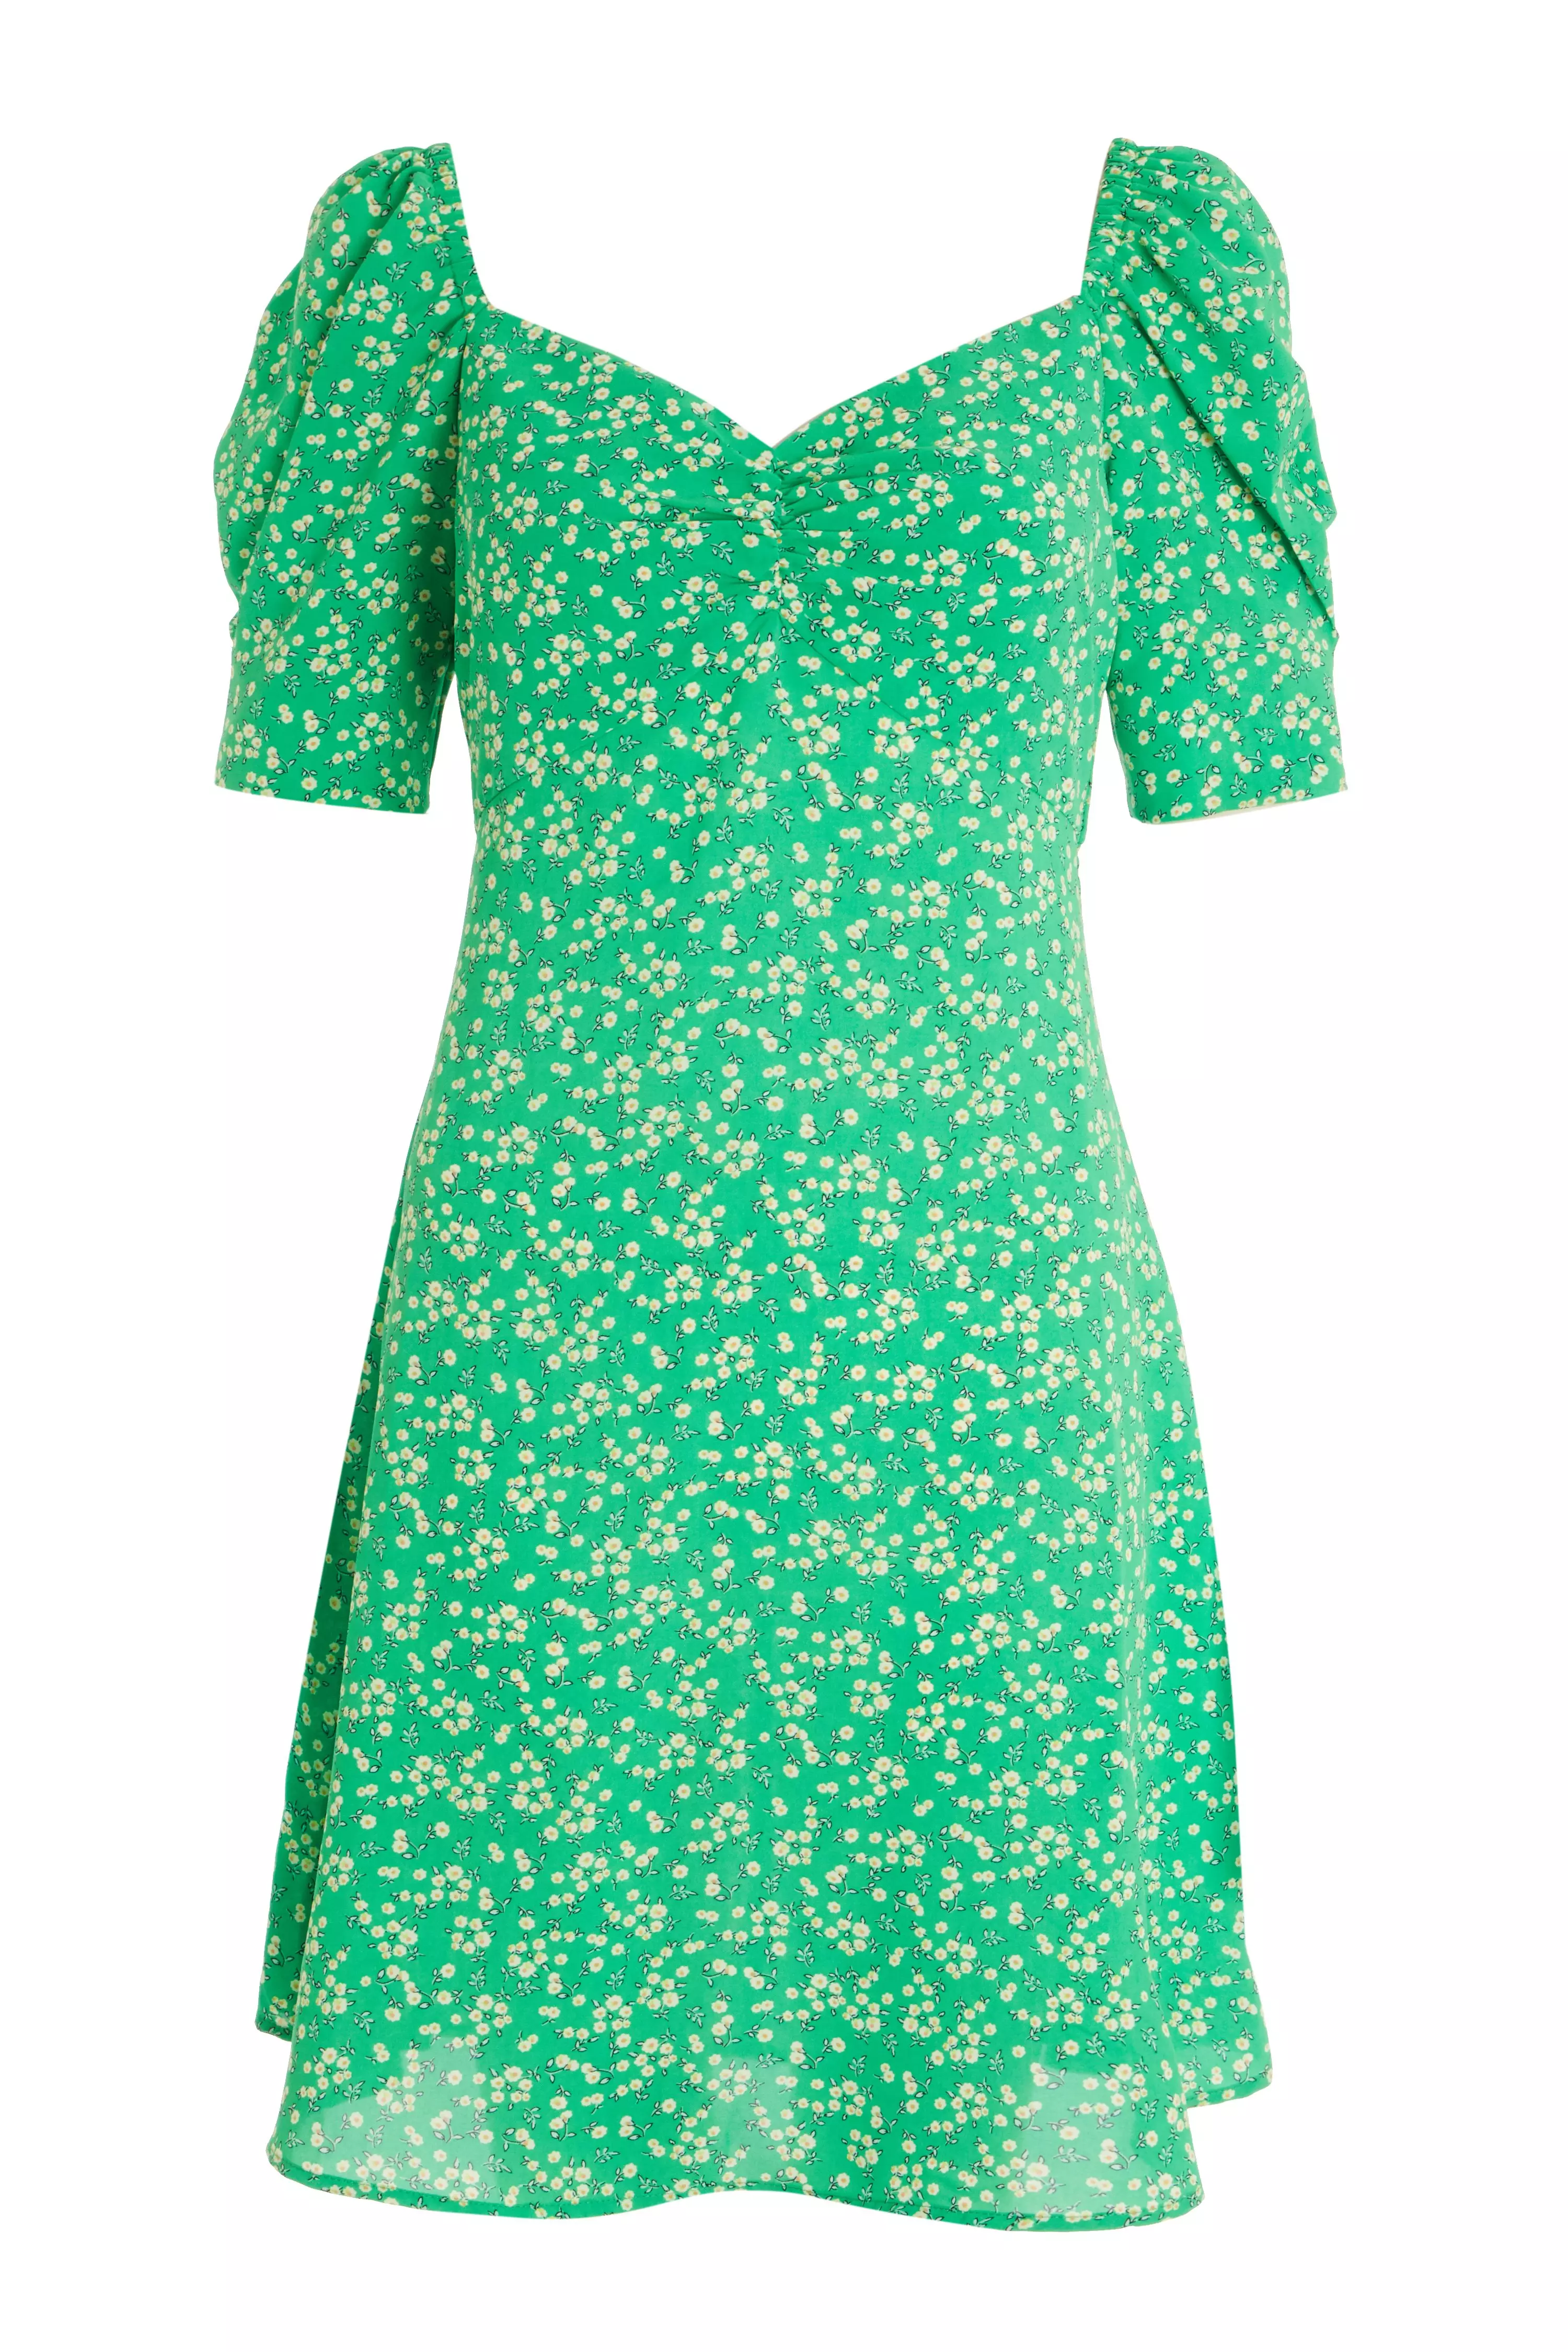 Green Floral Skater Dress - QUIZ Clothing